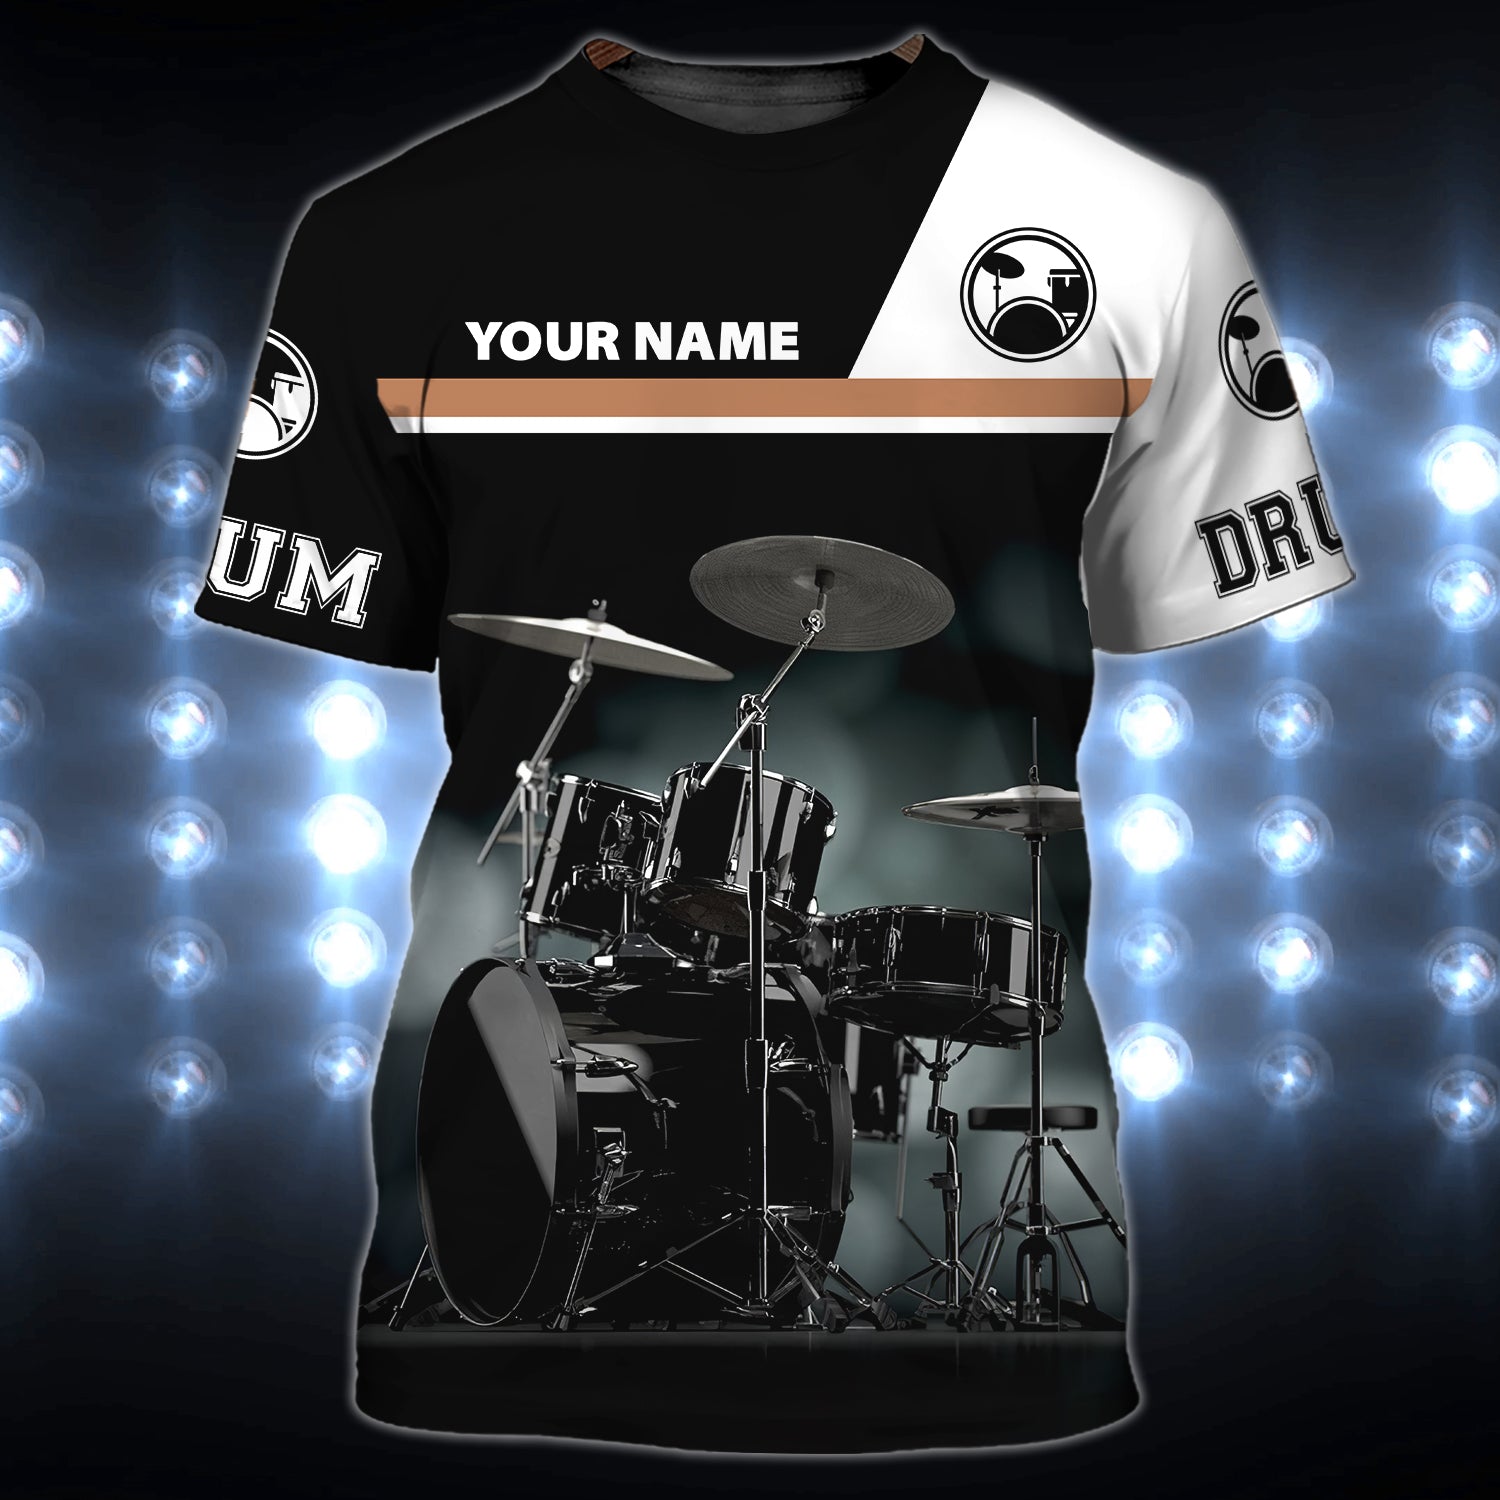 Drum - Personalized Name T Shirt 162  - CV98